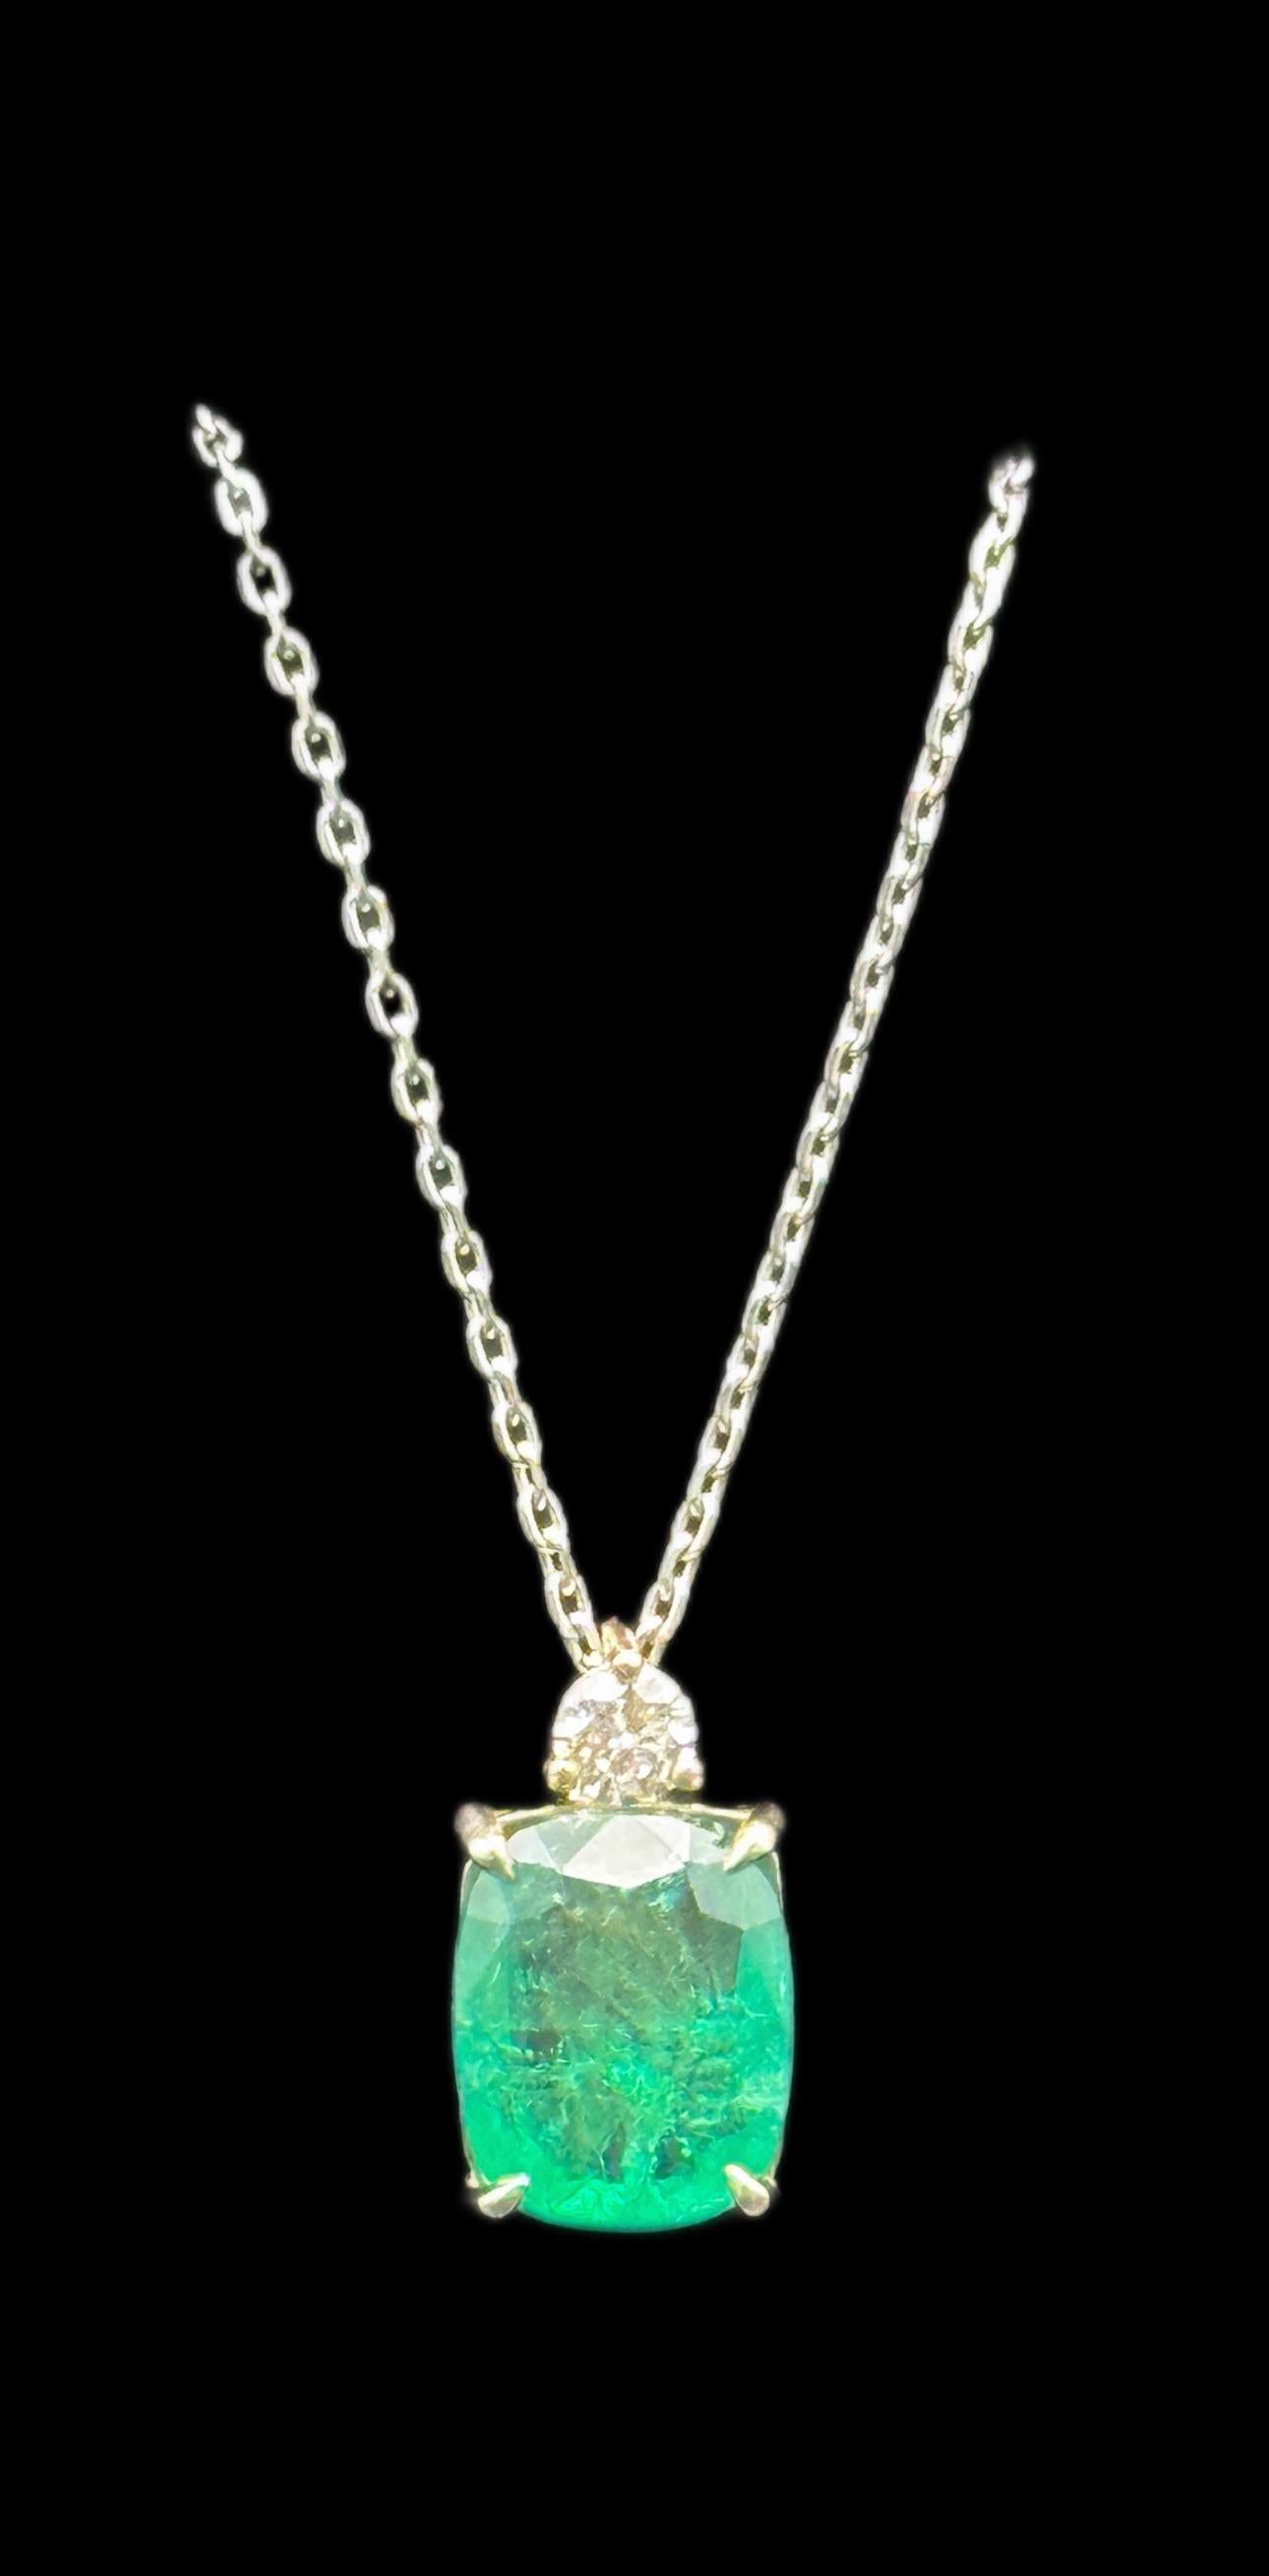 Center Stone: Emerald : 5.20ct
Diamond: 0.21ct